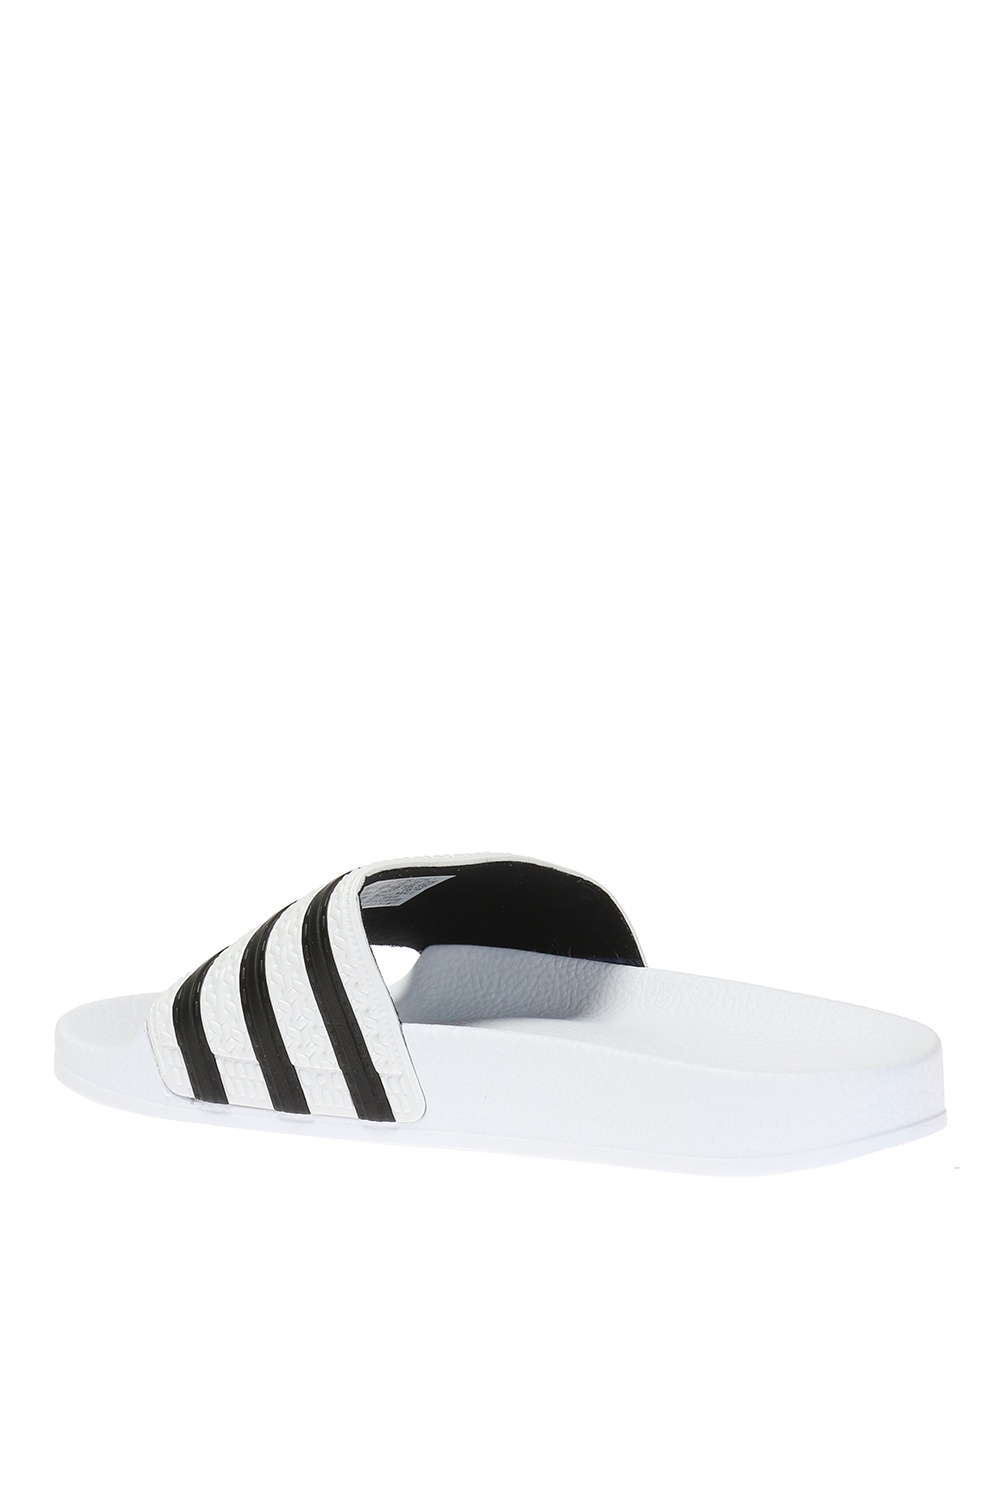 schommel Voorbereiding zege adidas Bold D Rose 5 Boost OG 'White Tan' - Adilette' slippers ADIDAS Bold  Originals - IetpShops Australia